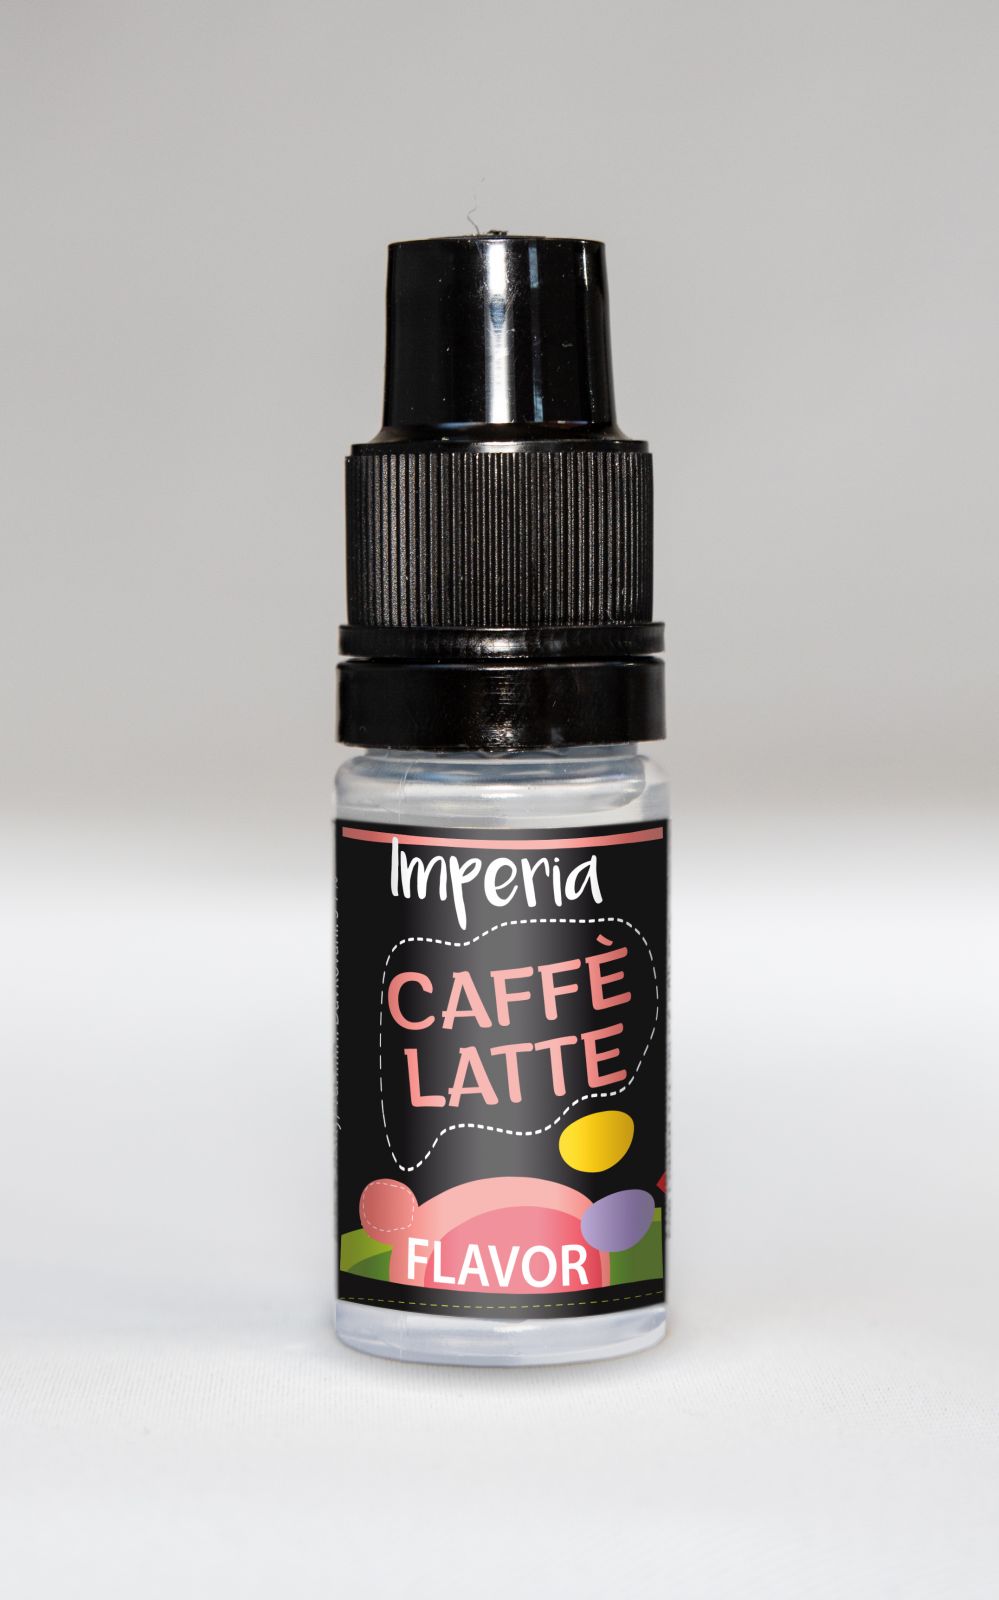 CAFFÉ LATTE - Aróma Imperia Black Label Boudoir Samadhi s.r.o.